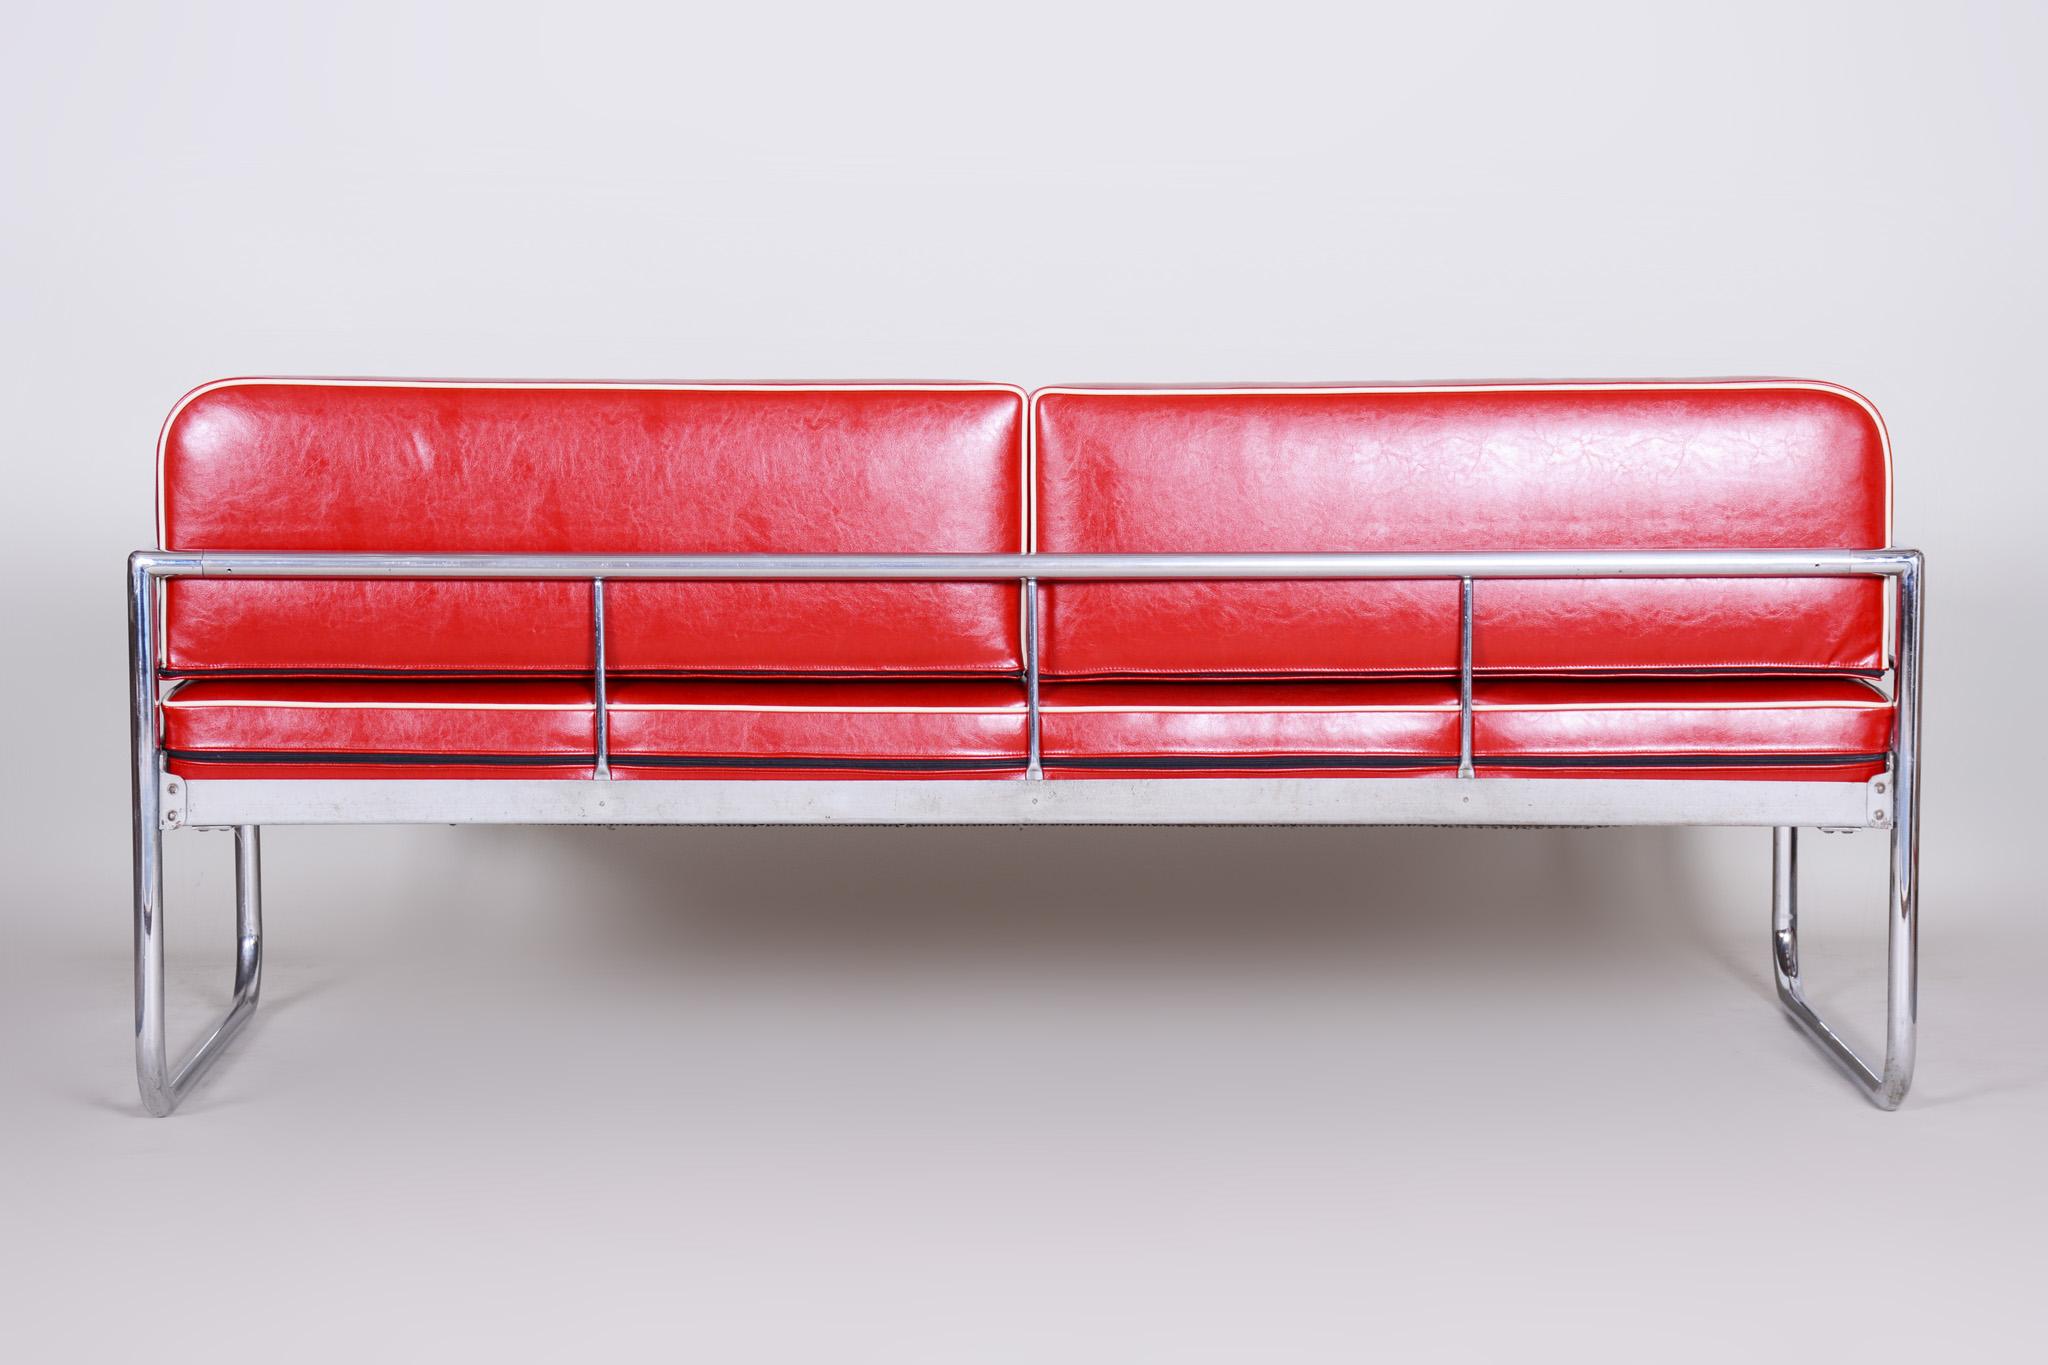 20th Century Czech Bauhaus Red Tubular Chrome Sofa by Hynek Gottwald, New Upholstery, 1930s For Sale